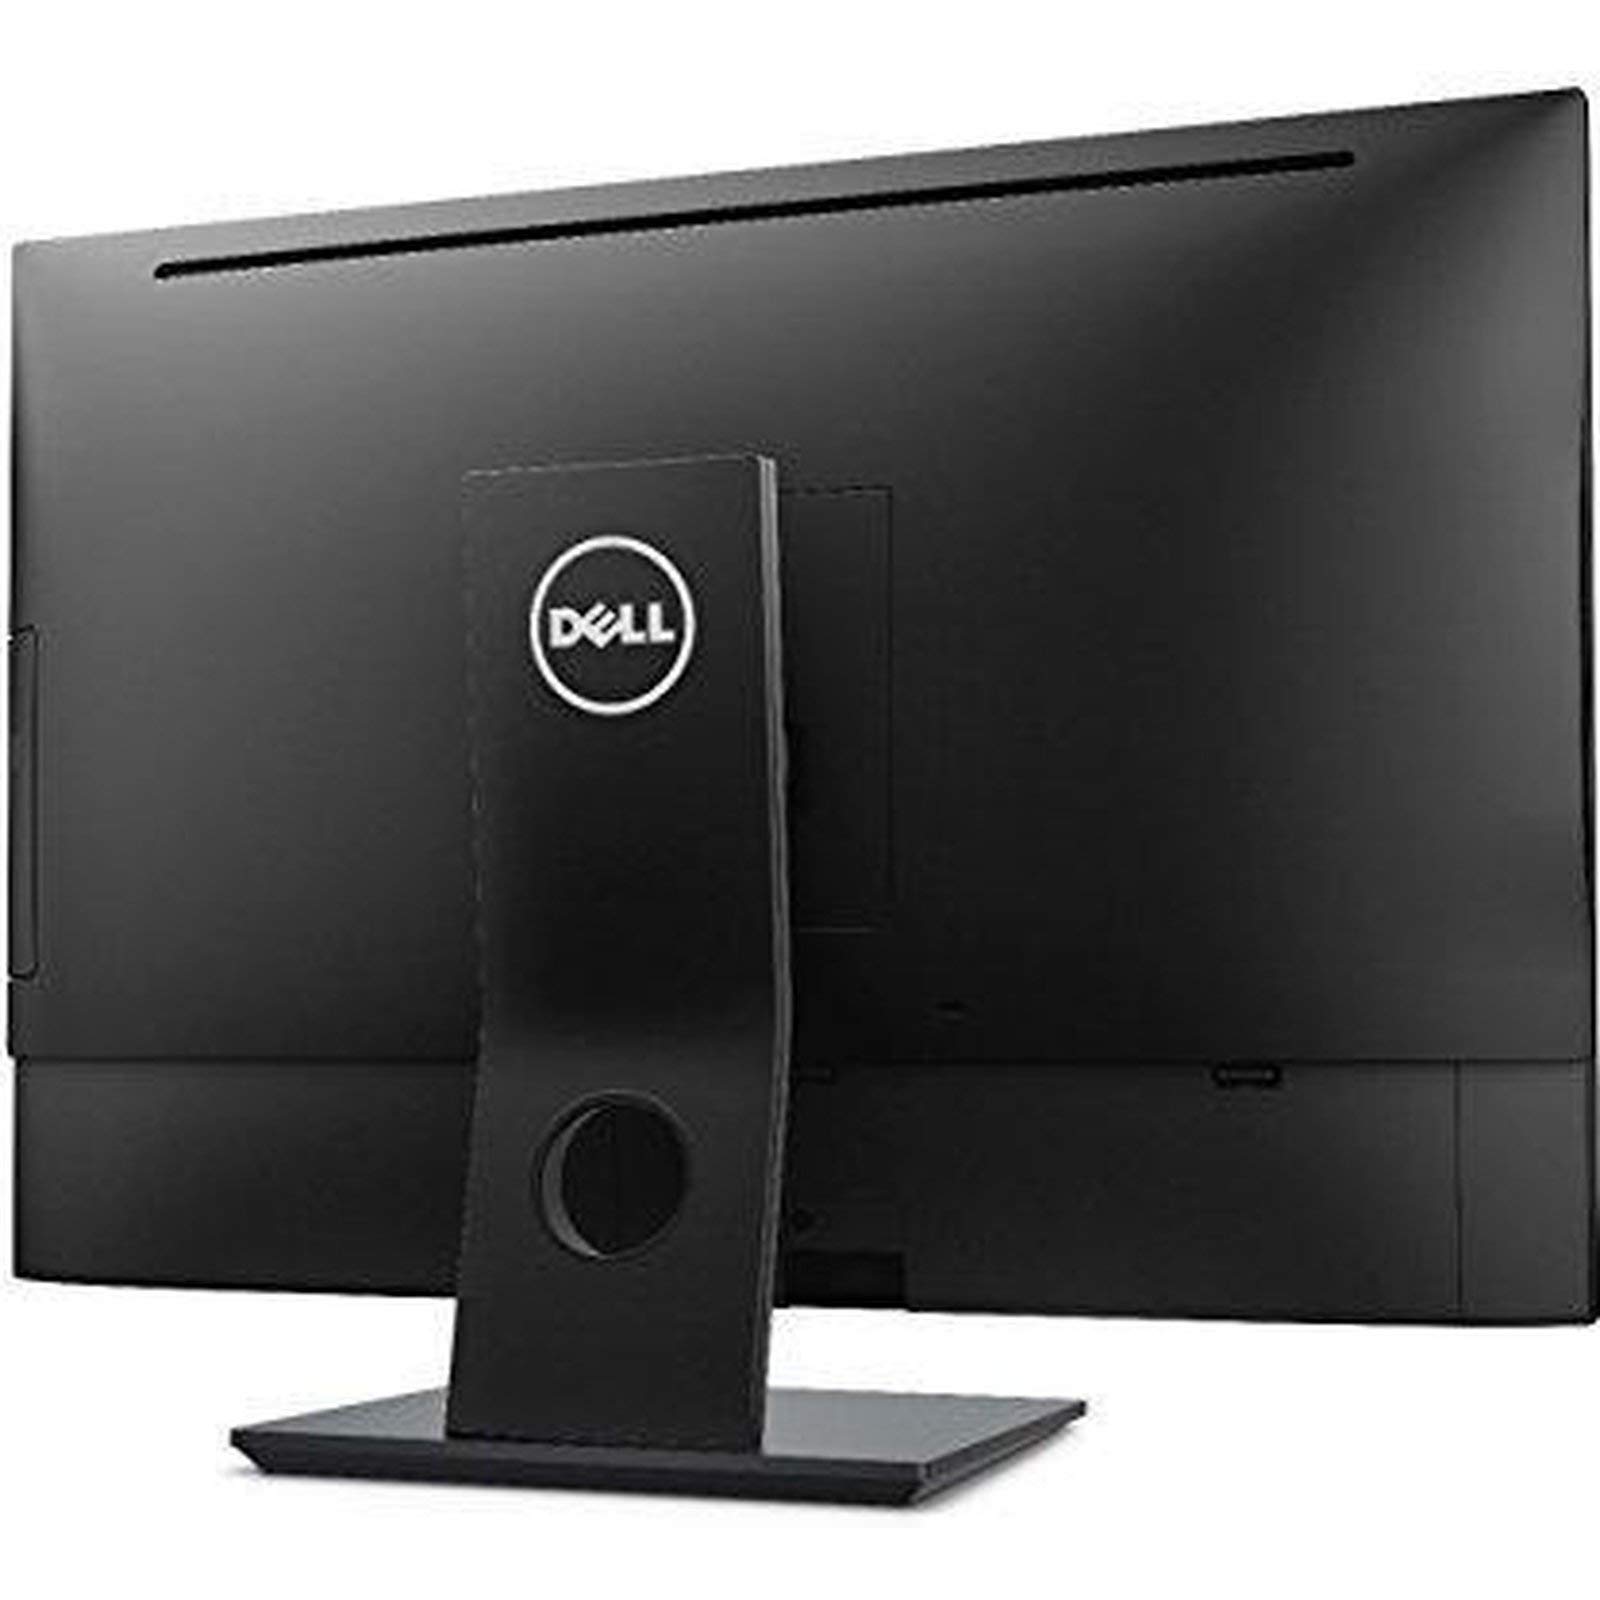 Dell Optiplex 7450 FHD 24 inches Touch Screen All in One Computer PC (Intel Quad Core i5-7500, 8GB Ram, 500GB HDD, HDMI, Camera, WiFi, DVD-RW) Win10 Pro (Renewed)